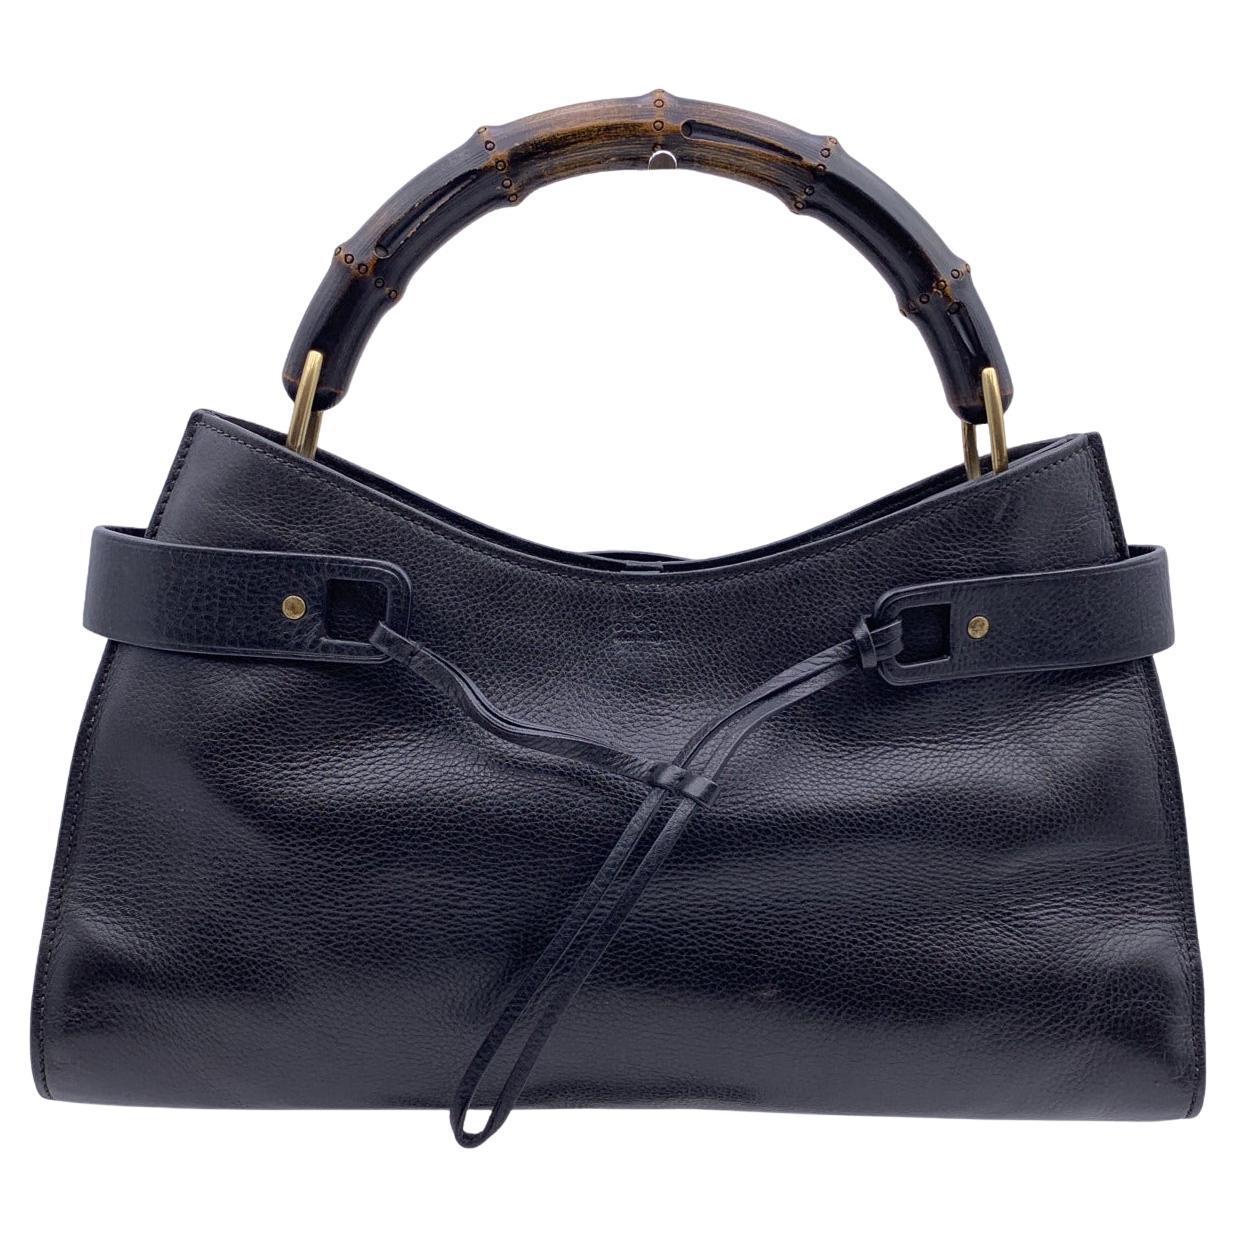 Gucci Black Leather Bamboo Tote Bag Handbag Satchel